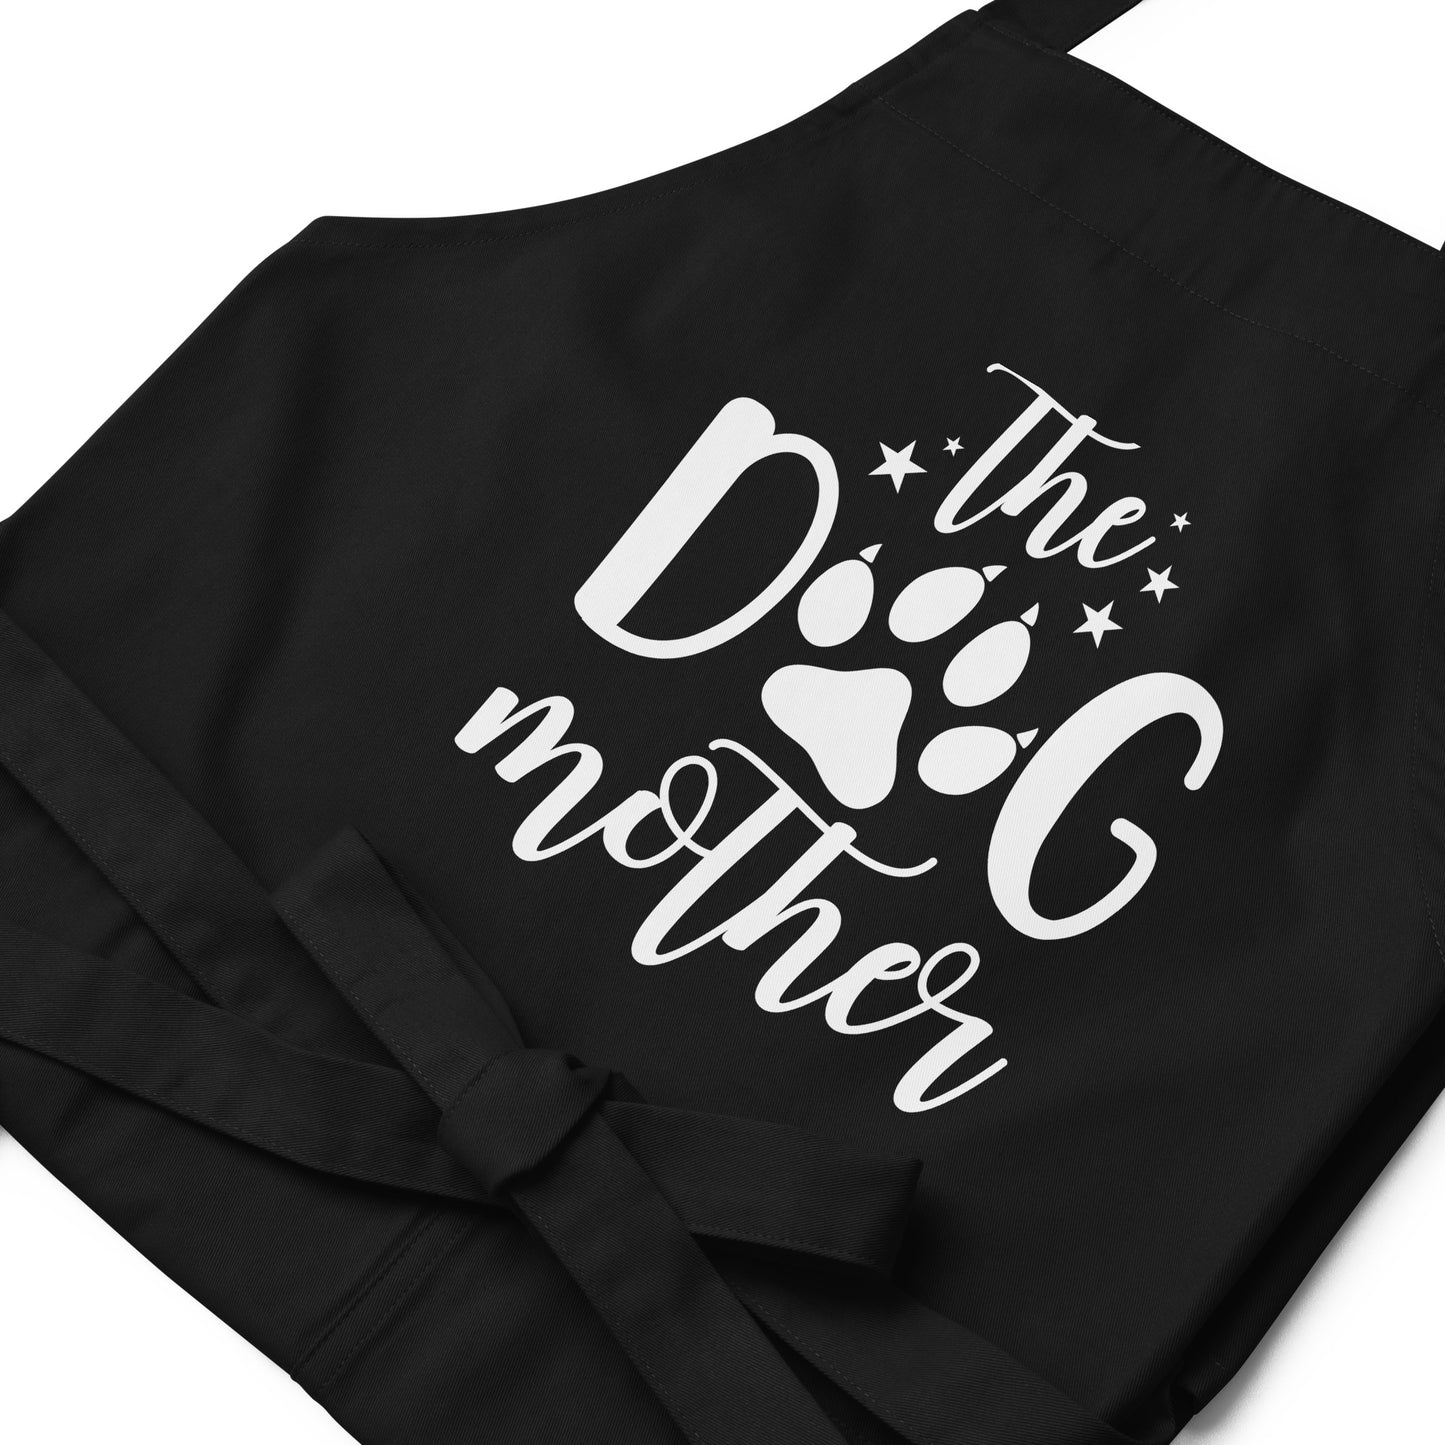 The Dog Mother Organic cotton apron